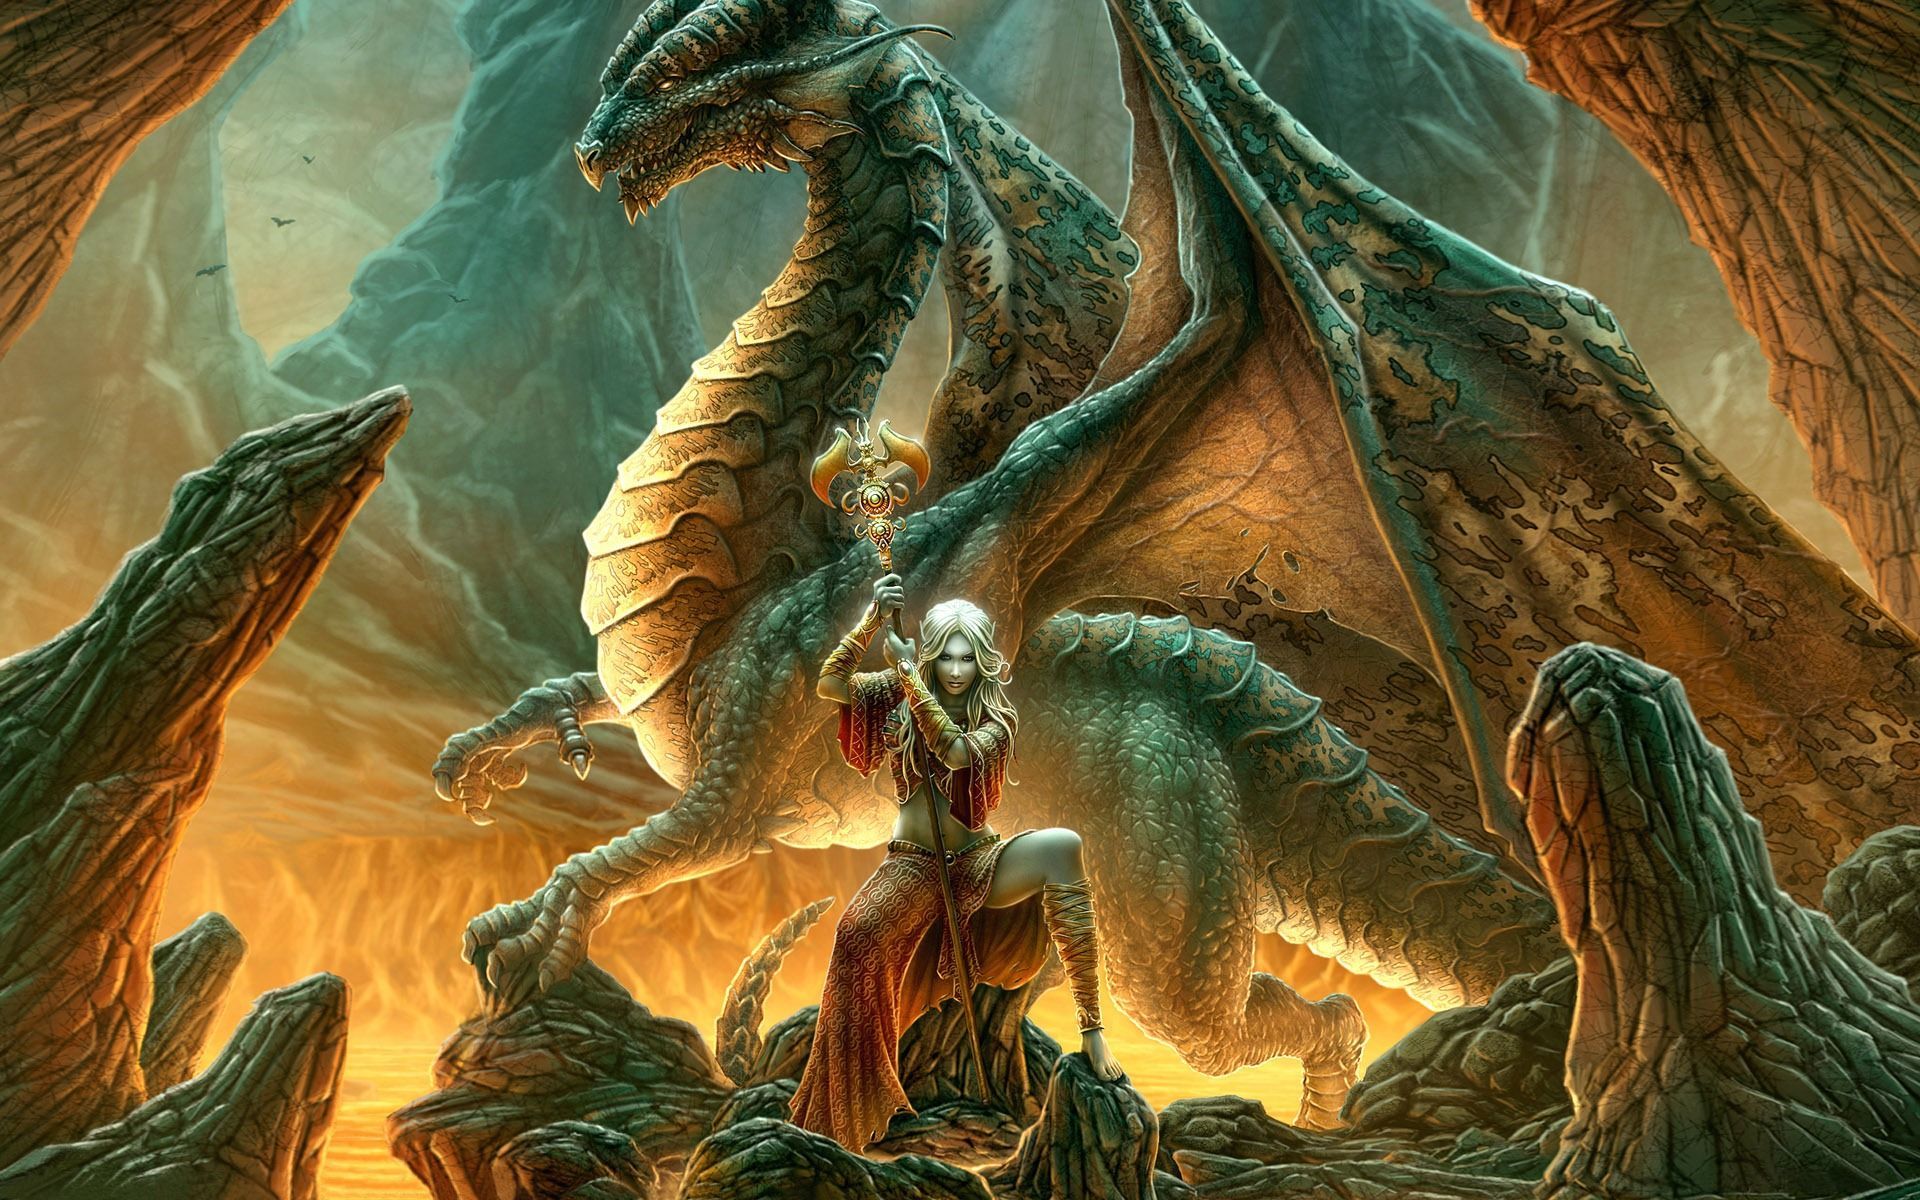 Dragon Wallpaper HD. Dragon picture, Fantasy dragon, Fantasy art